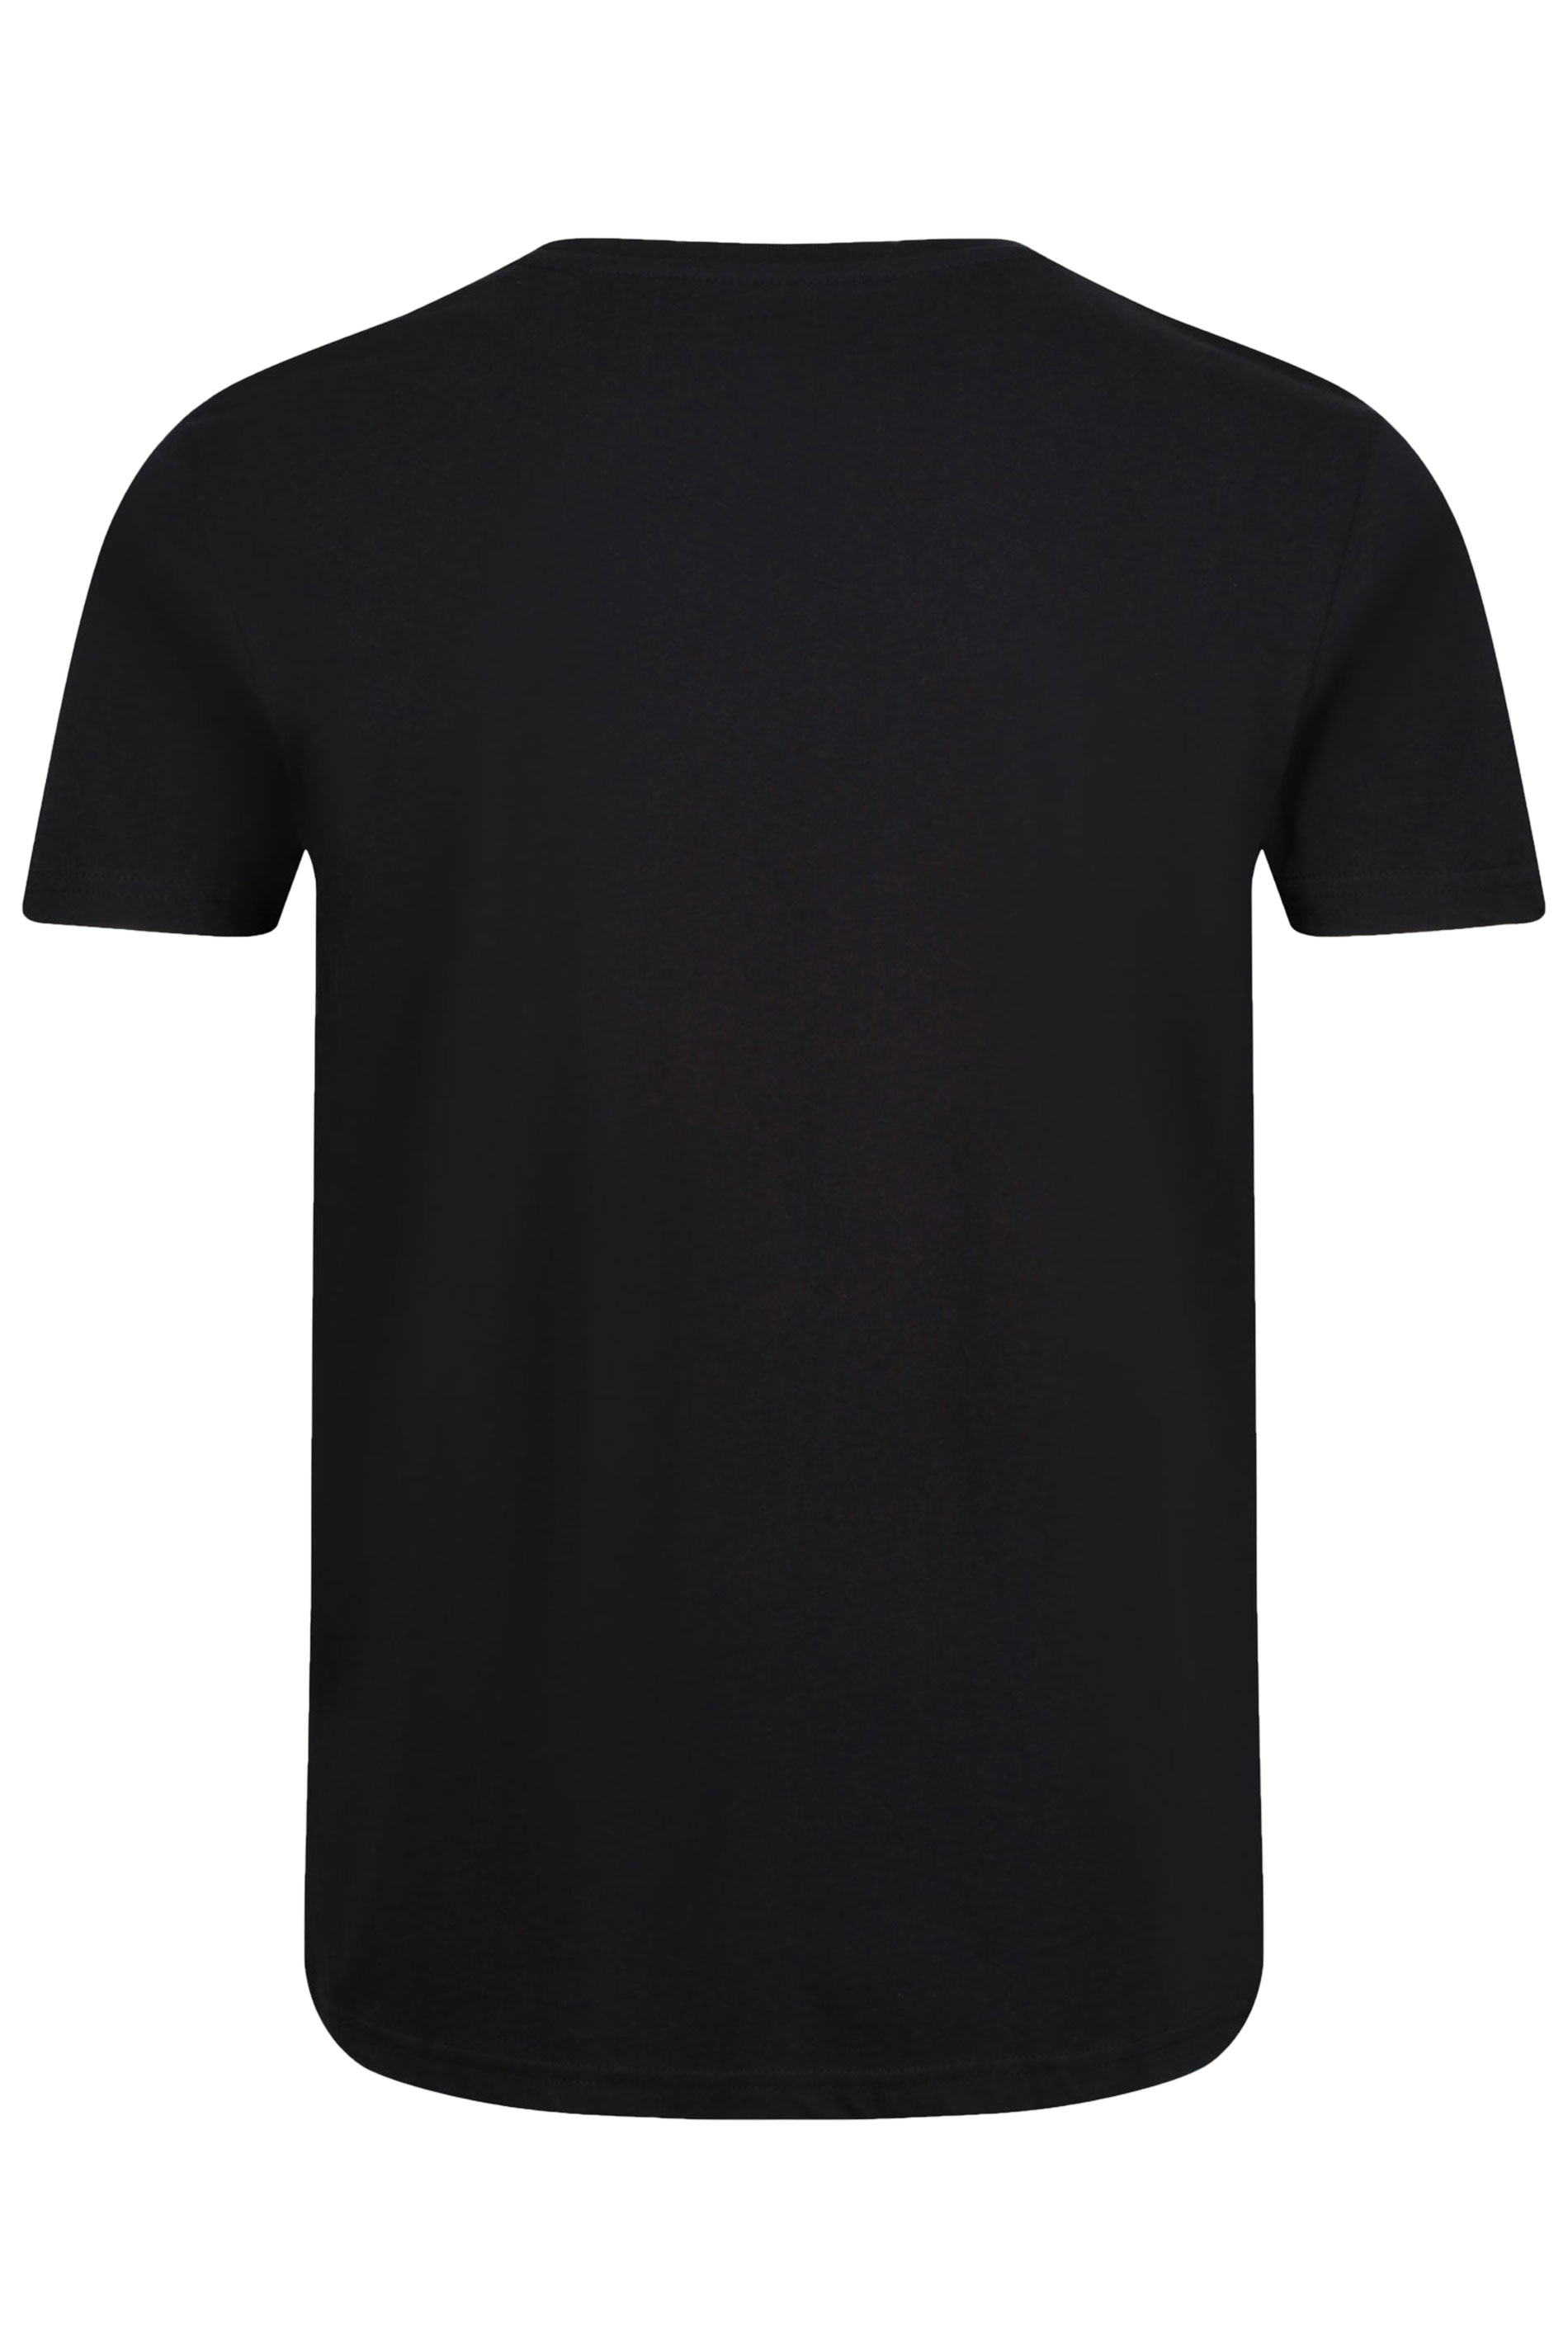 INDUSTRIES T-Shirts BadRhino ALPHA | Logo Black 2 PACK